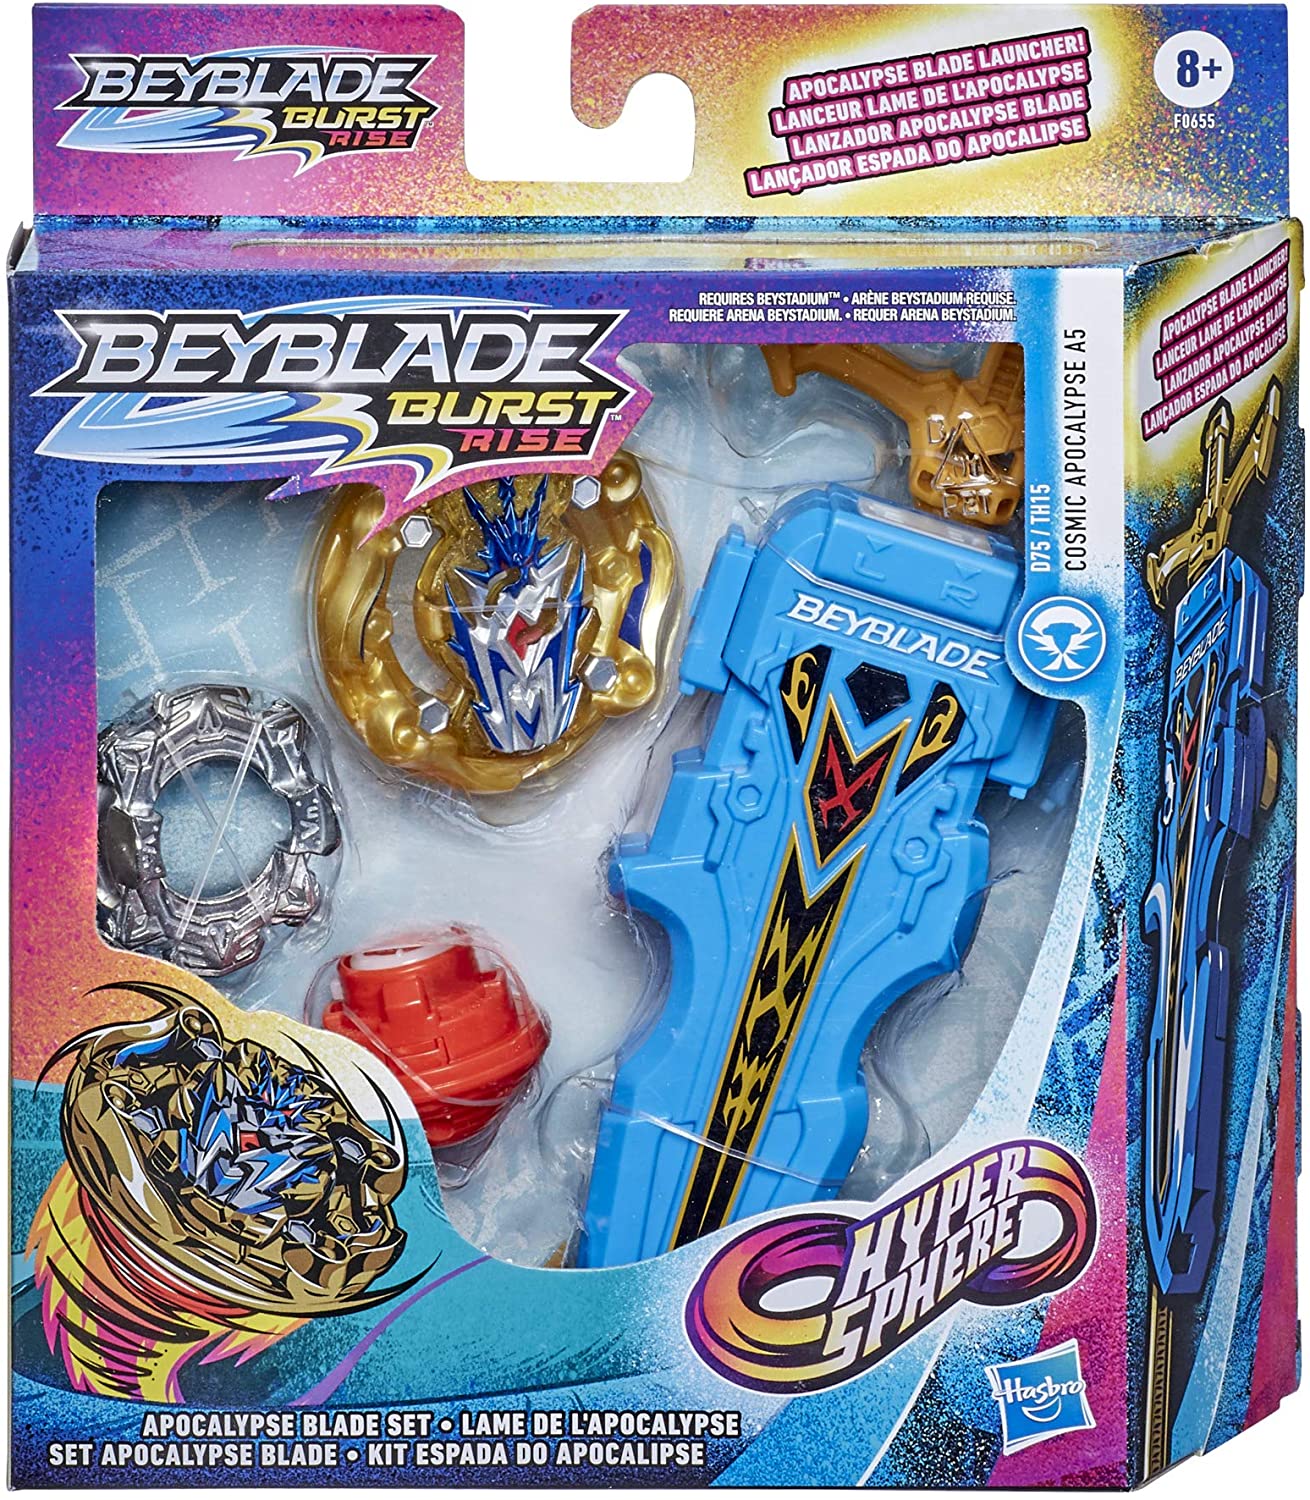 Beyblade Burst Toys Blade Tops Launchers